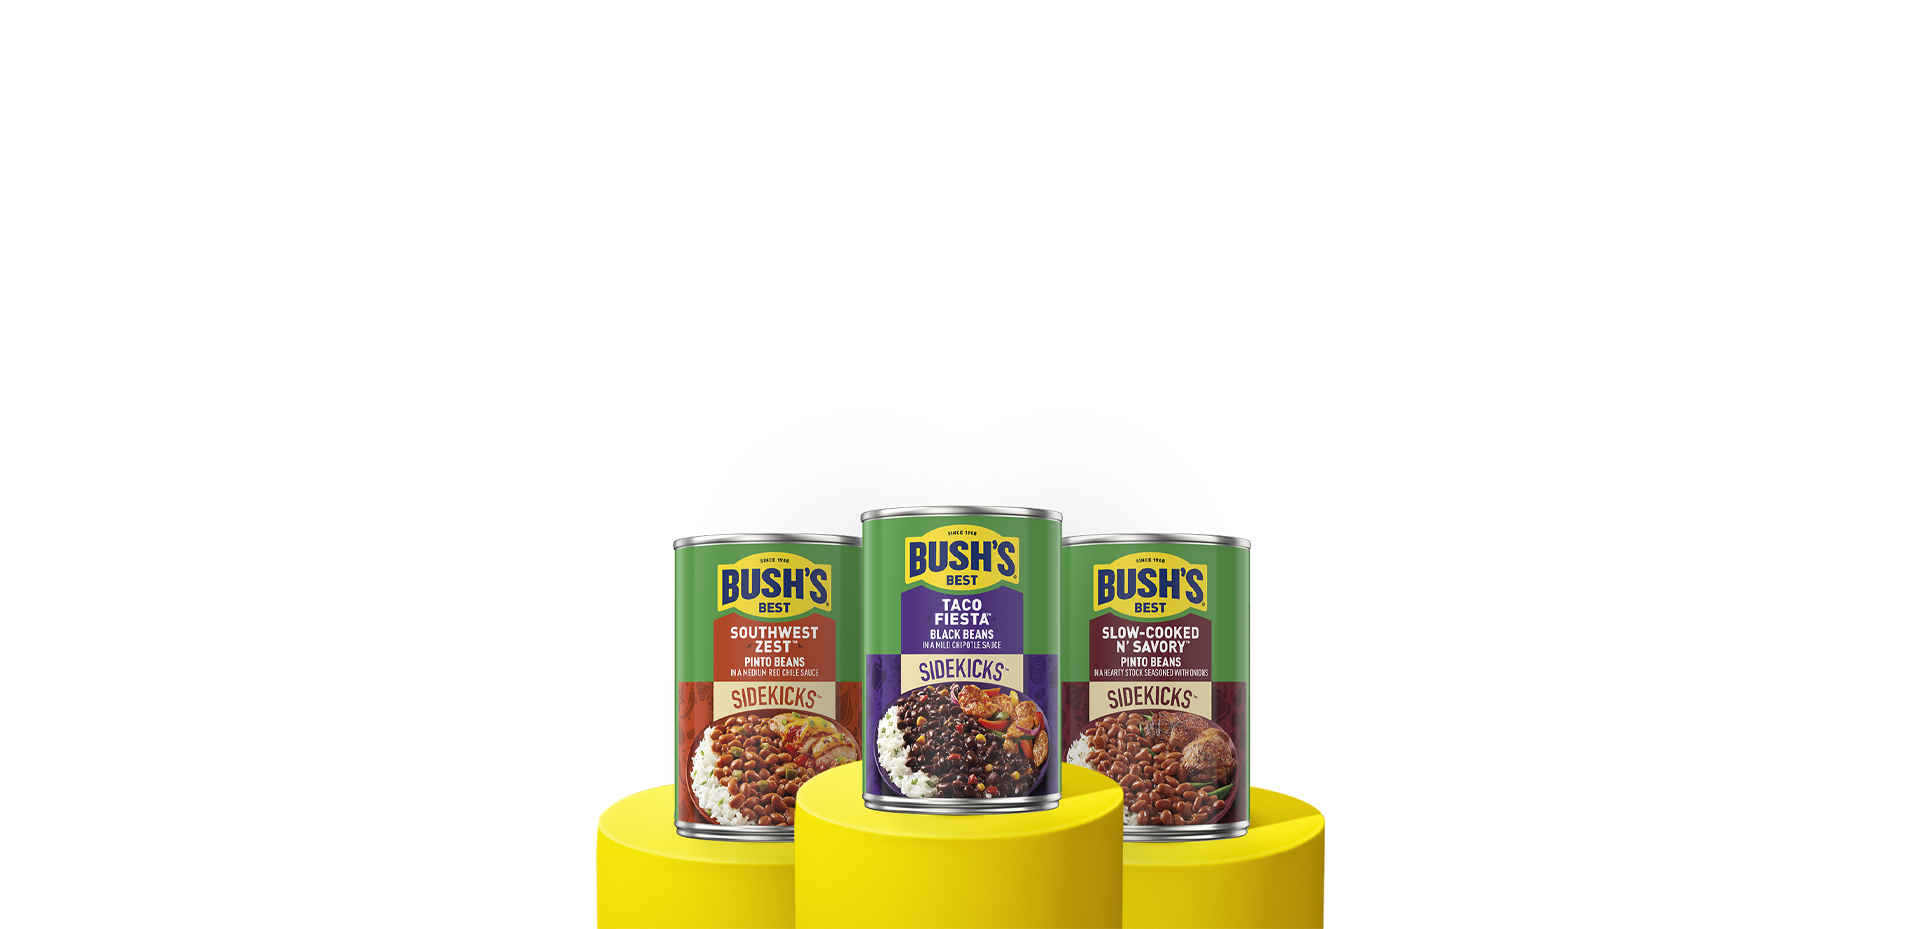 Three cans of Bush's Sidekicks beans on a yellow pedestals.